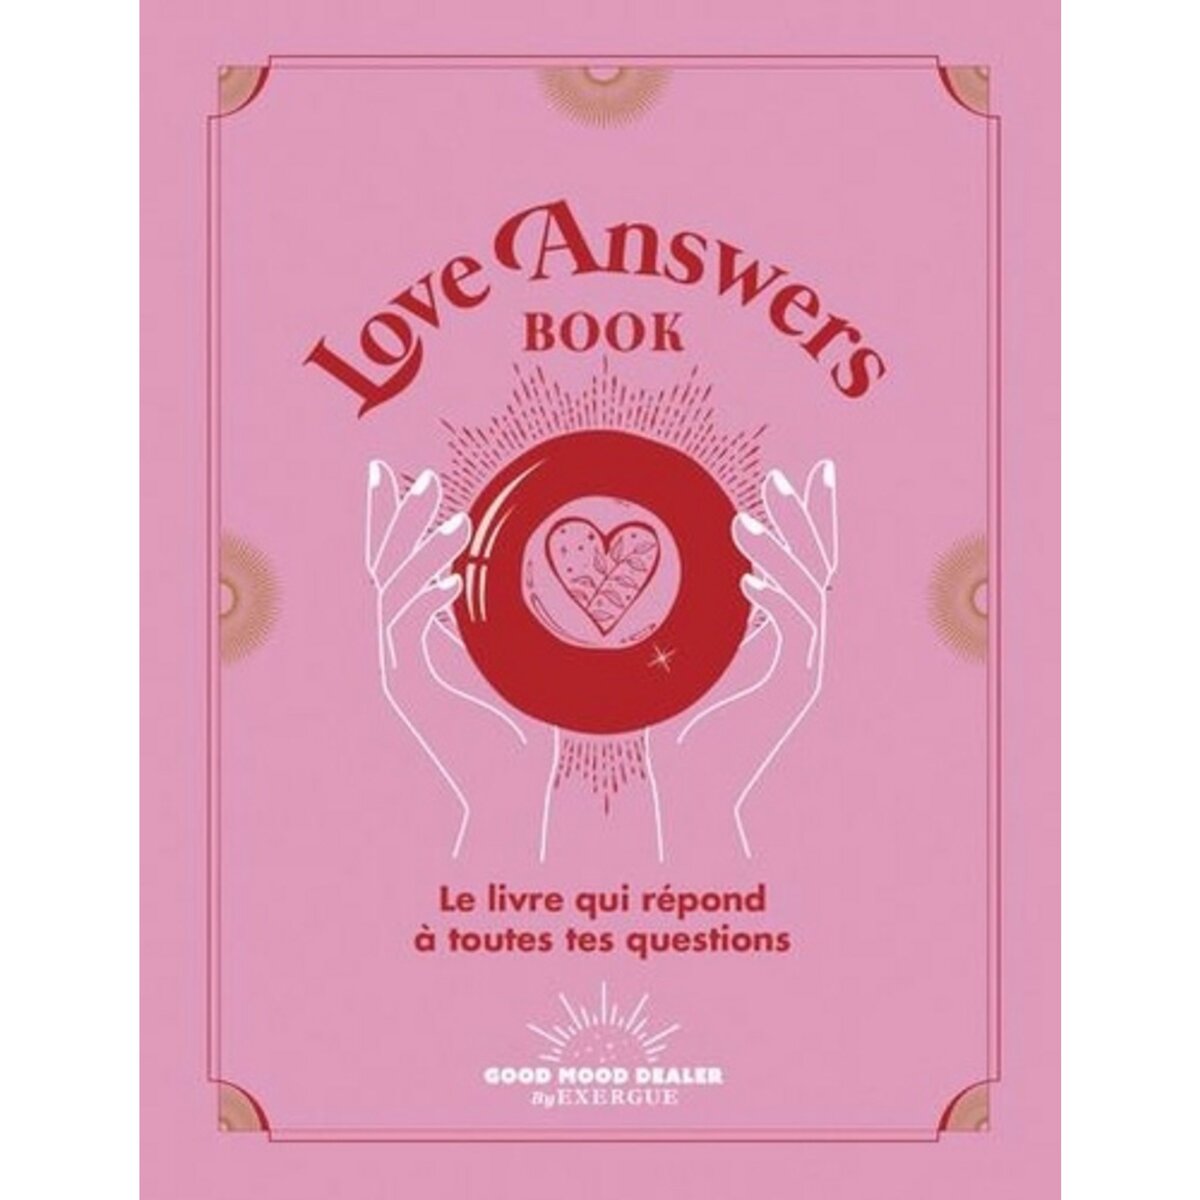  LOVE ANSWERS BOOK, Good Mood Dealer